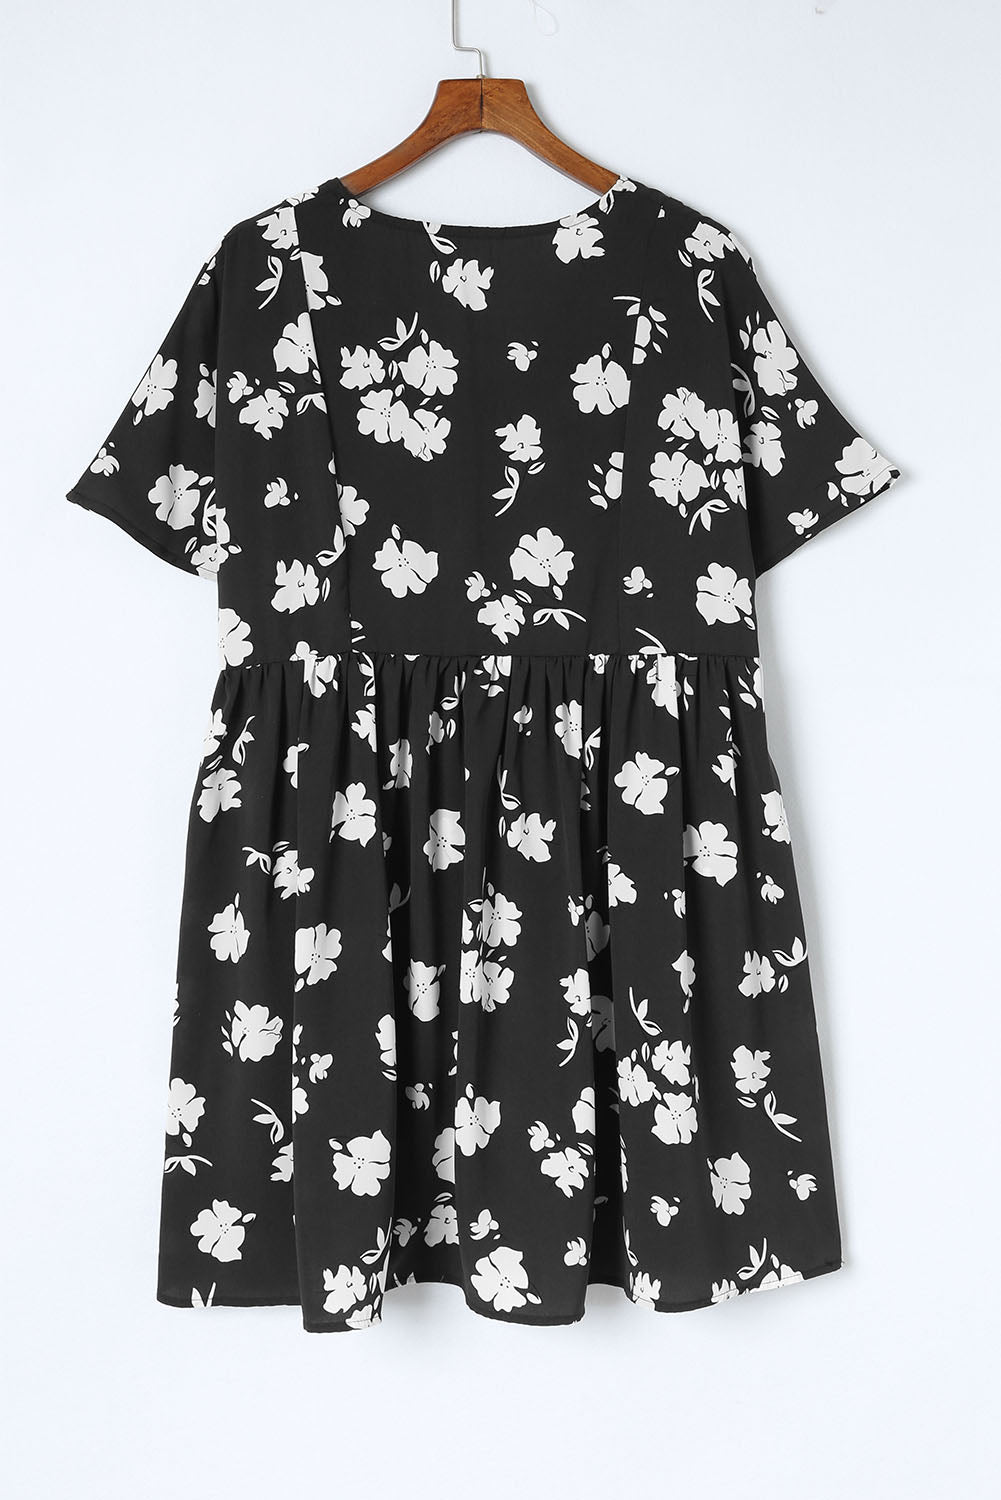 Black Floral Print V Neck Empire Waist Dress With Pockets